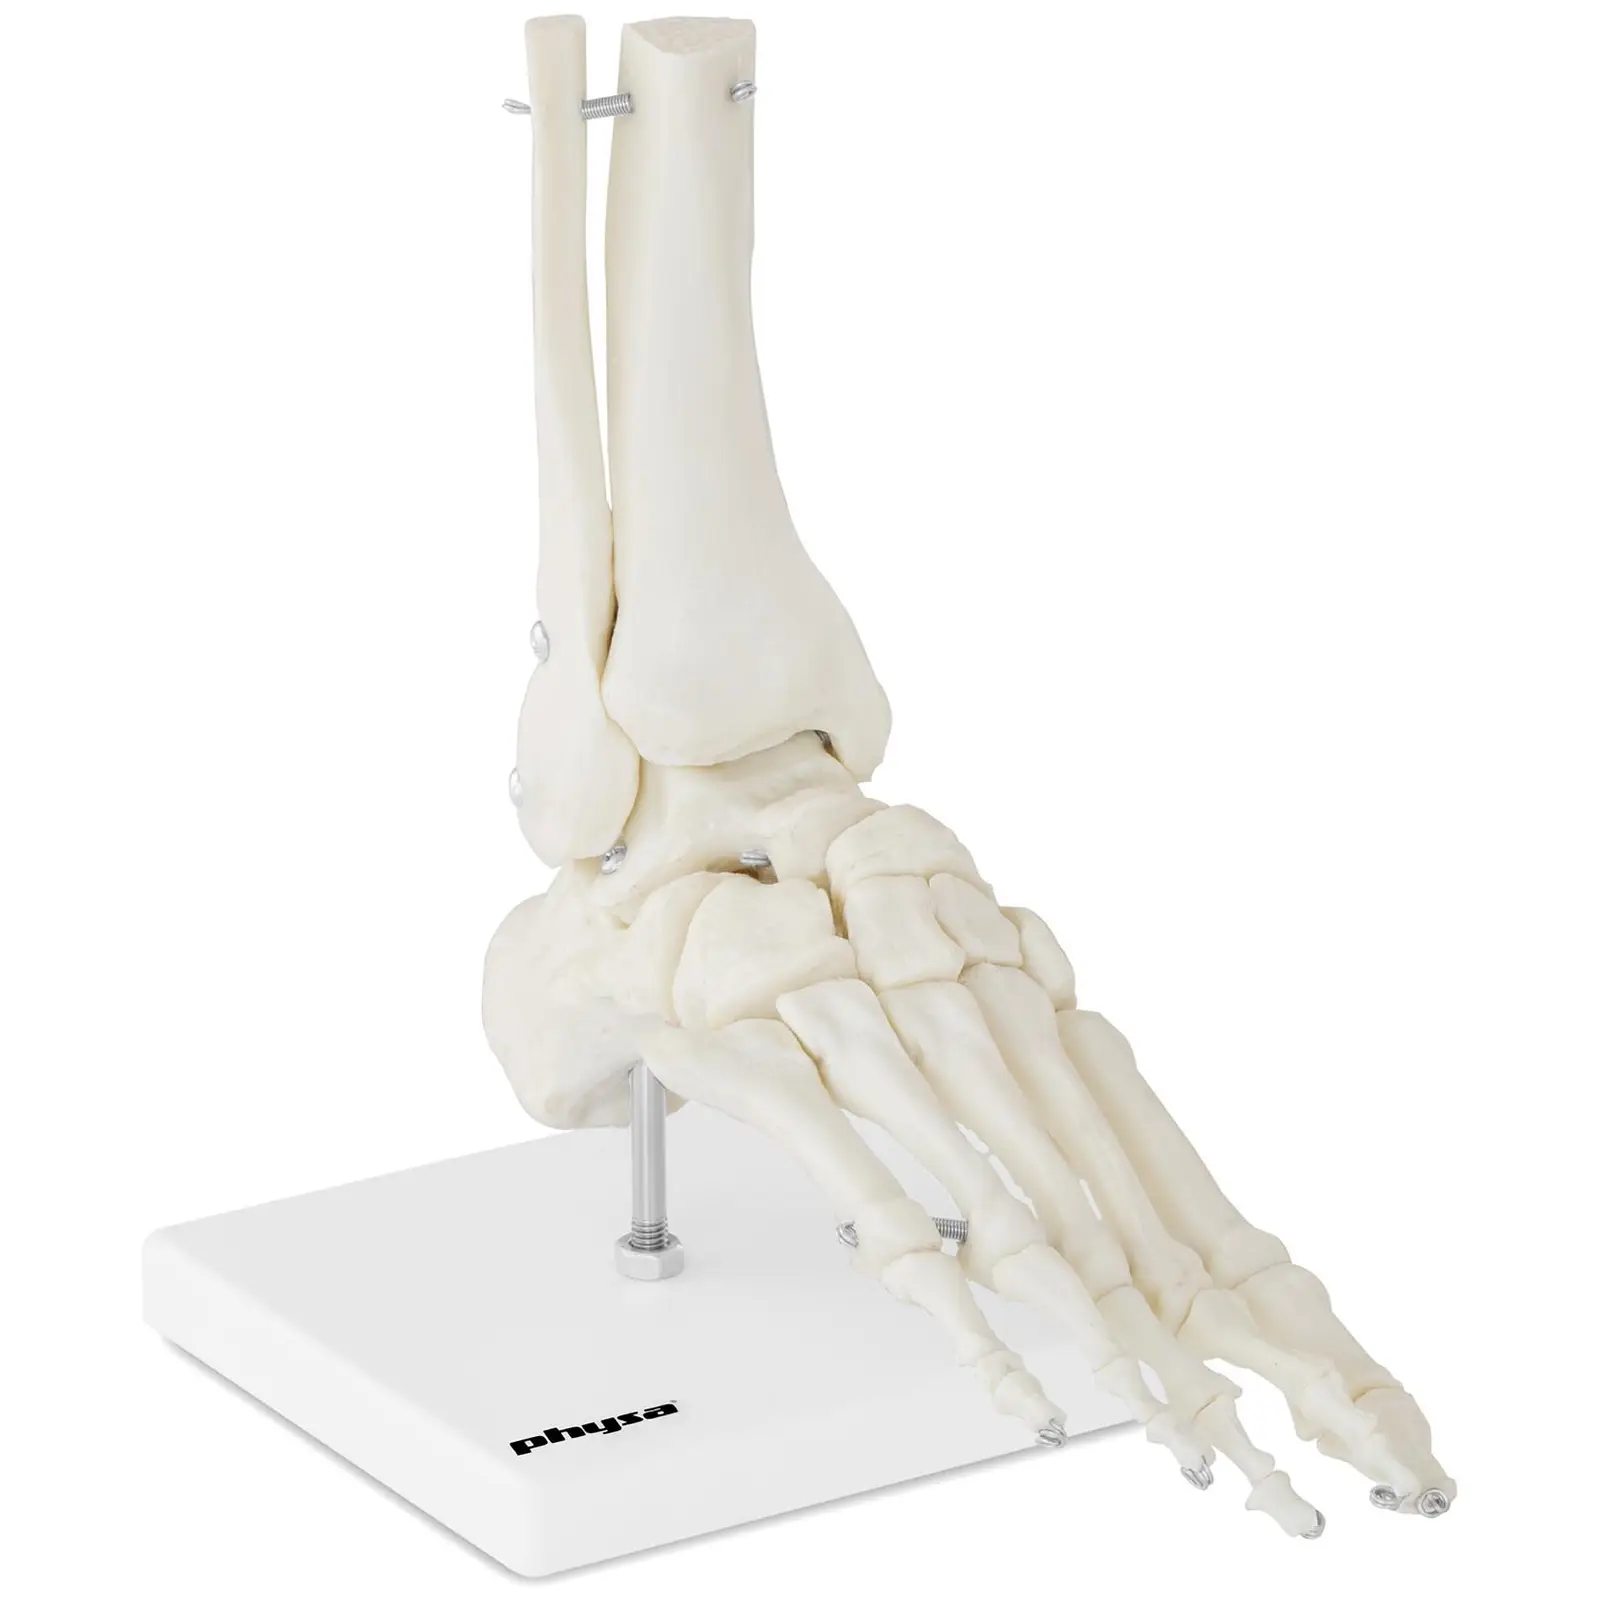 Maquette anatomique pied humain